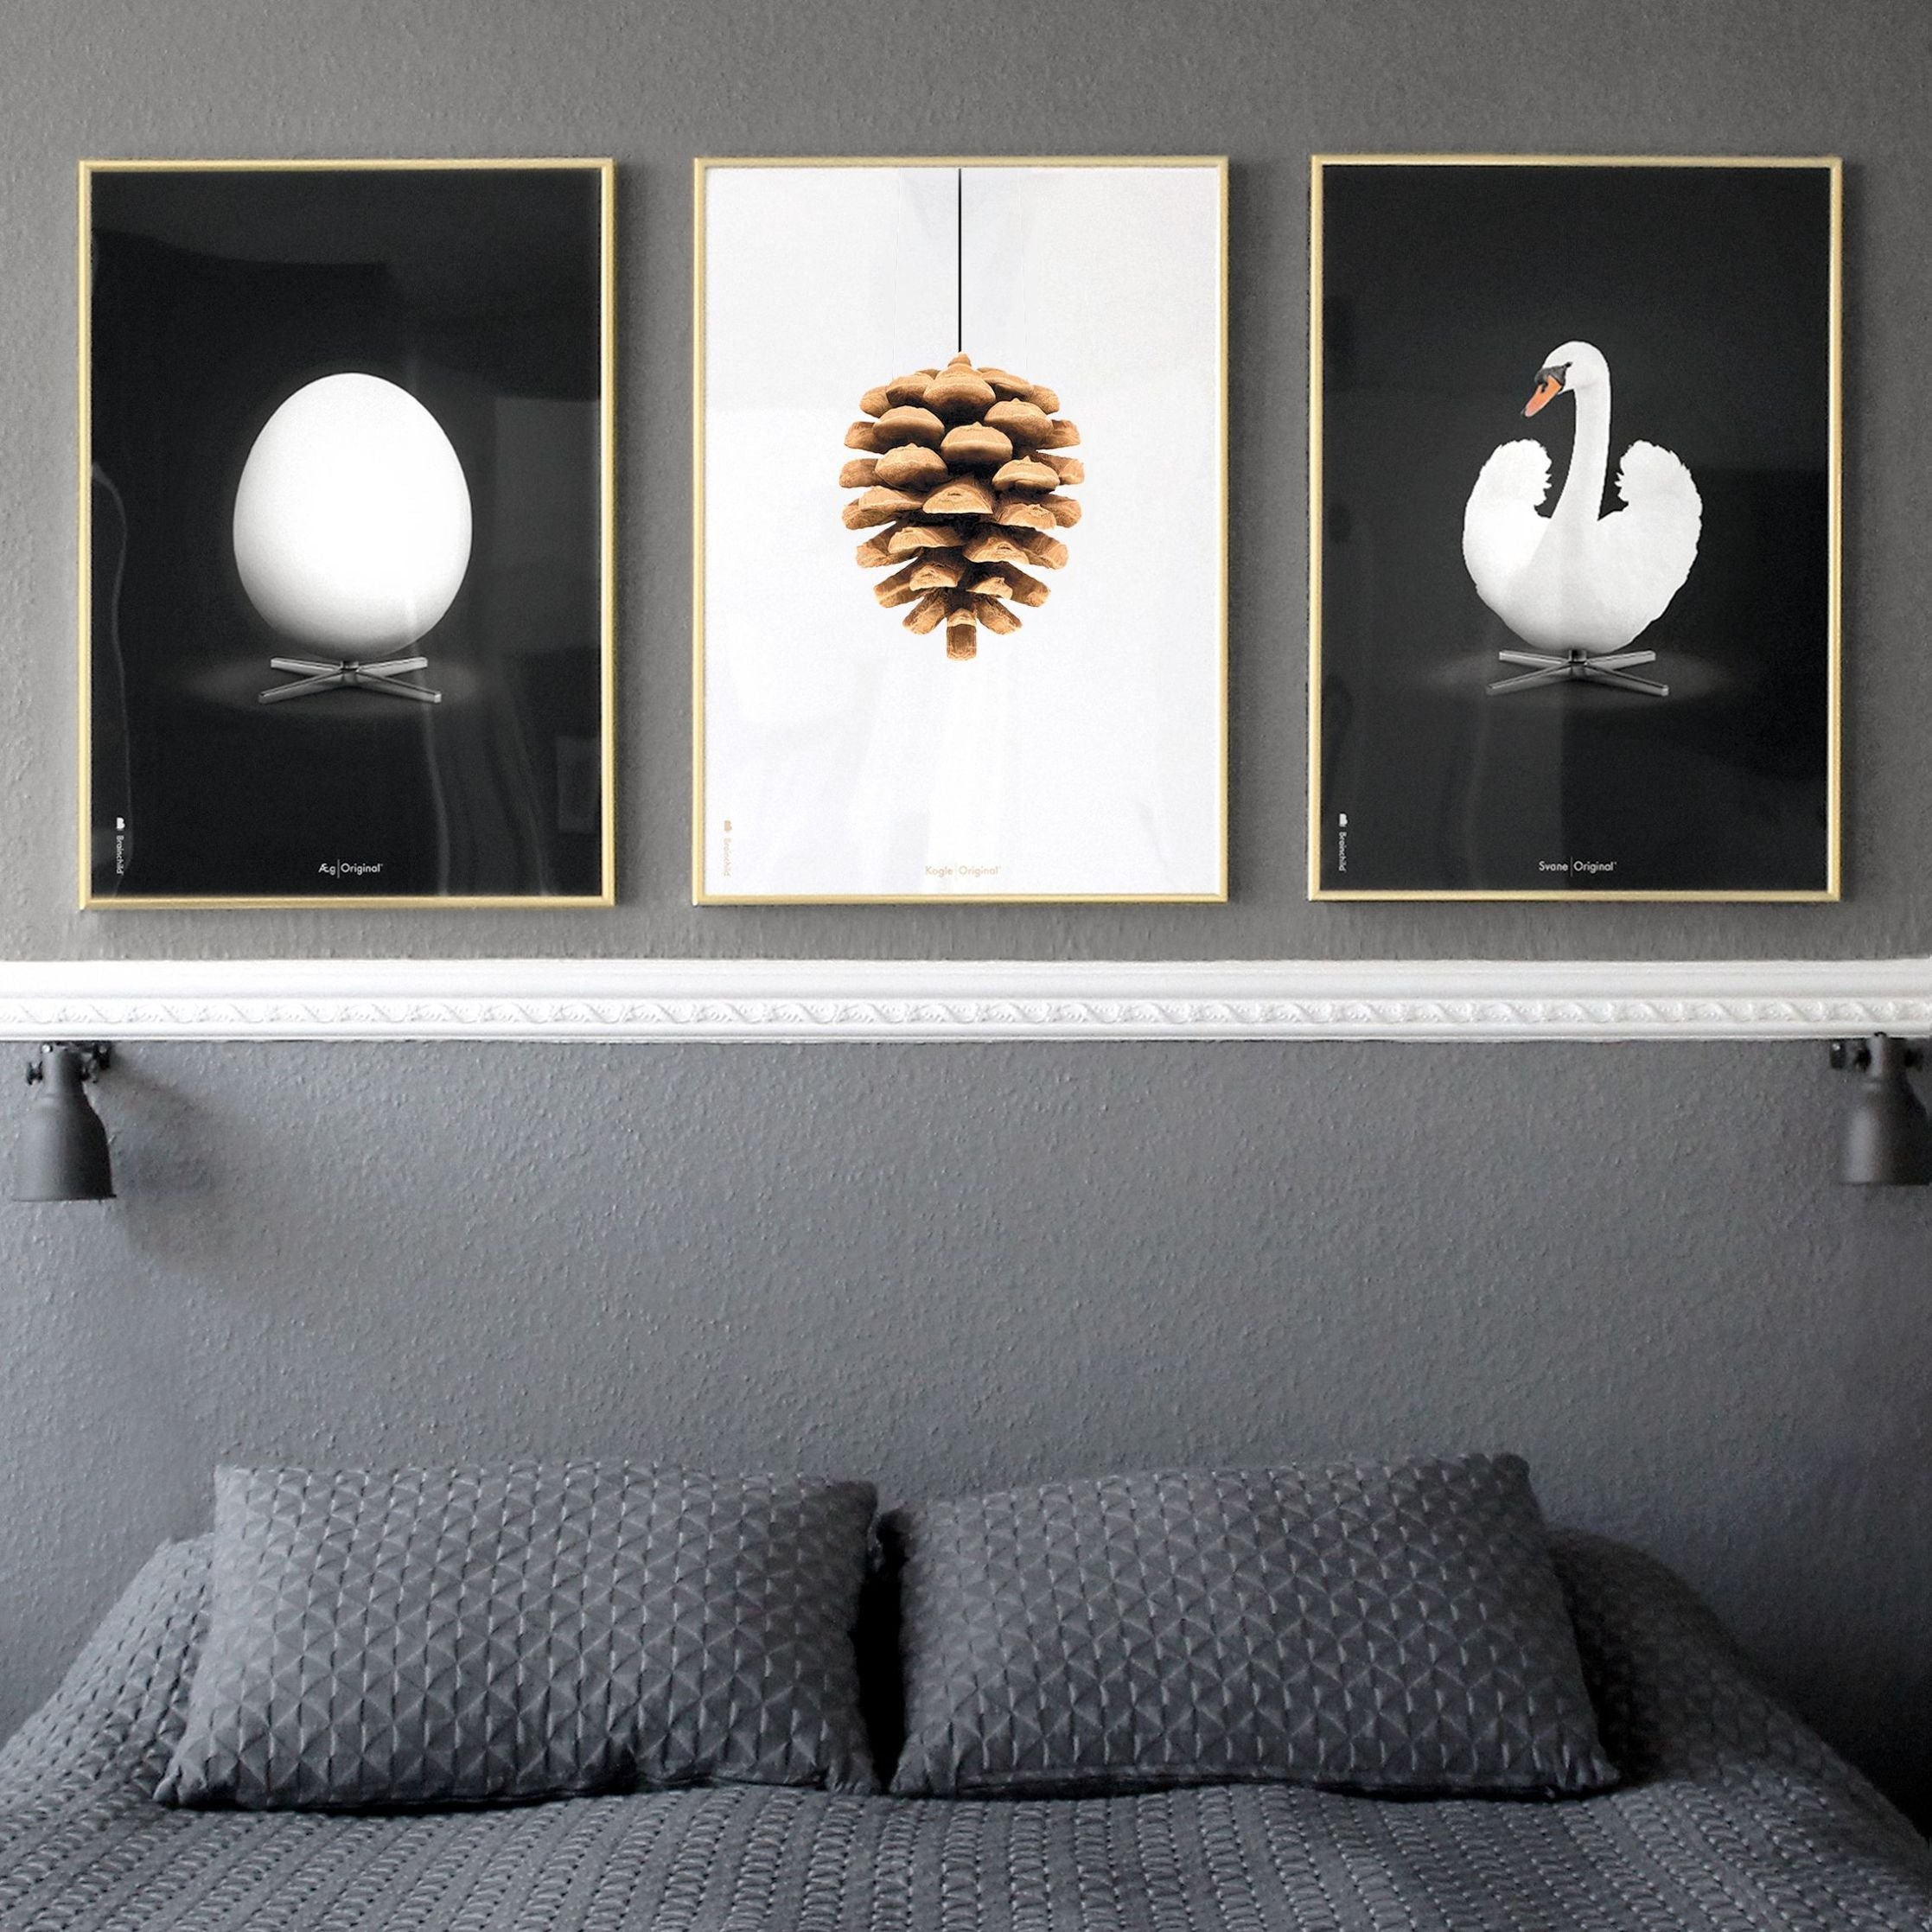 Brainchild Swan Classic Poster, Frame Made Of Light Wood 30x40 Cm, White/White Background